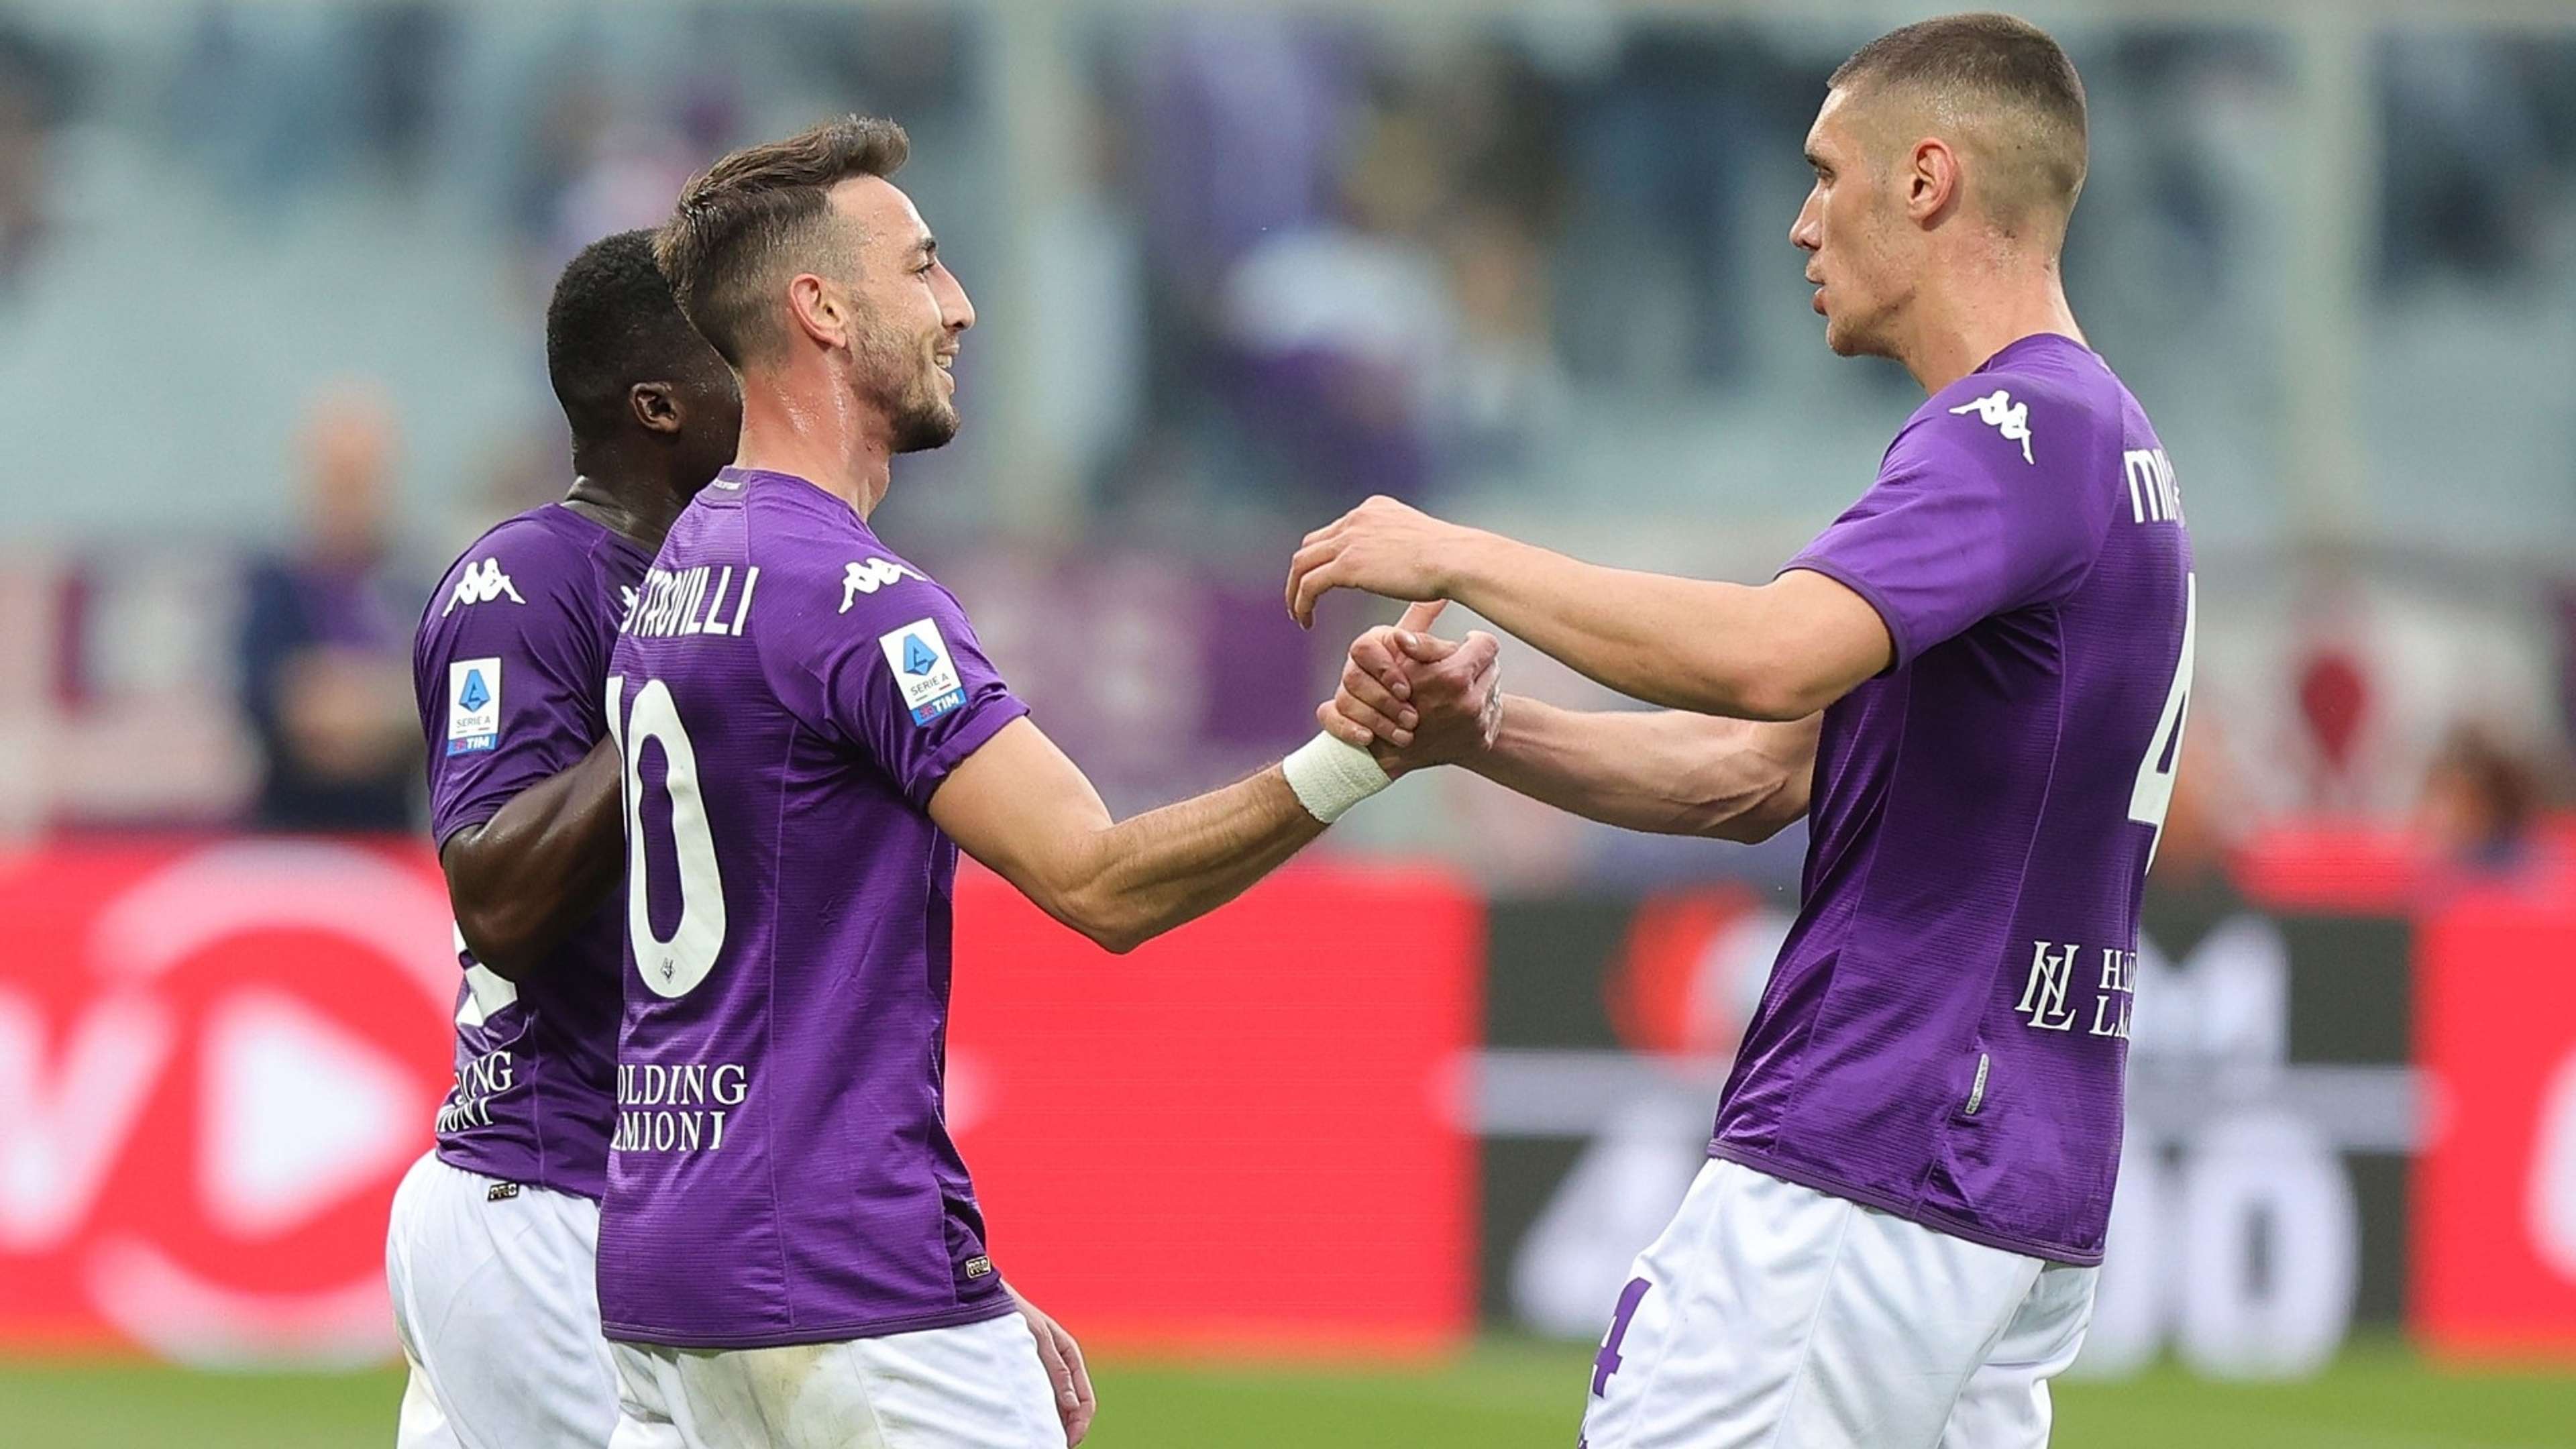 Fiorentina celebrates goal against Sampdoria